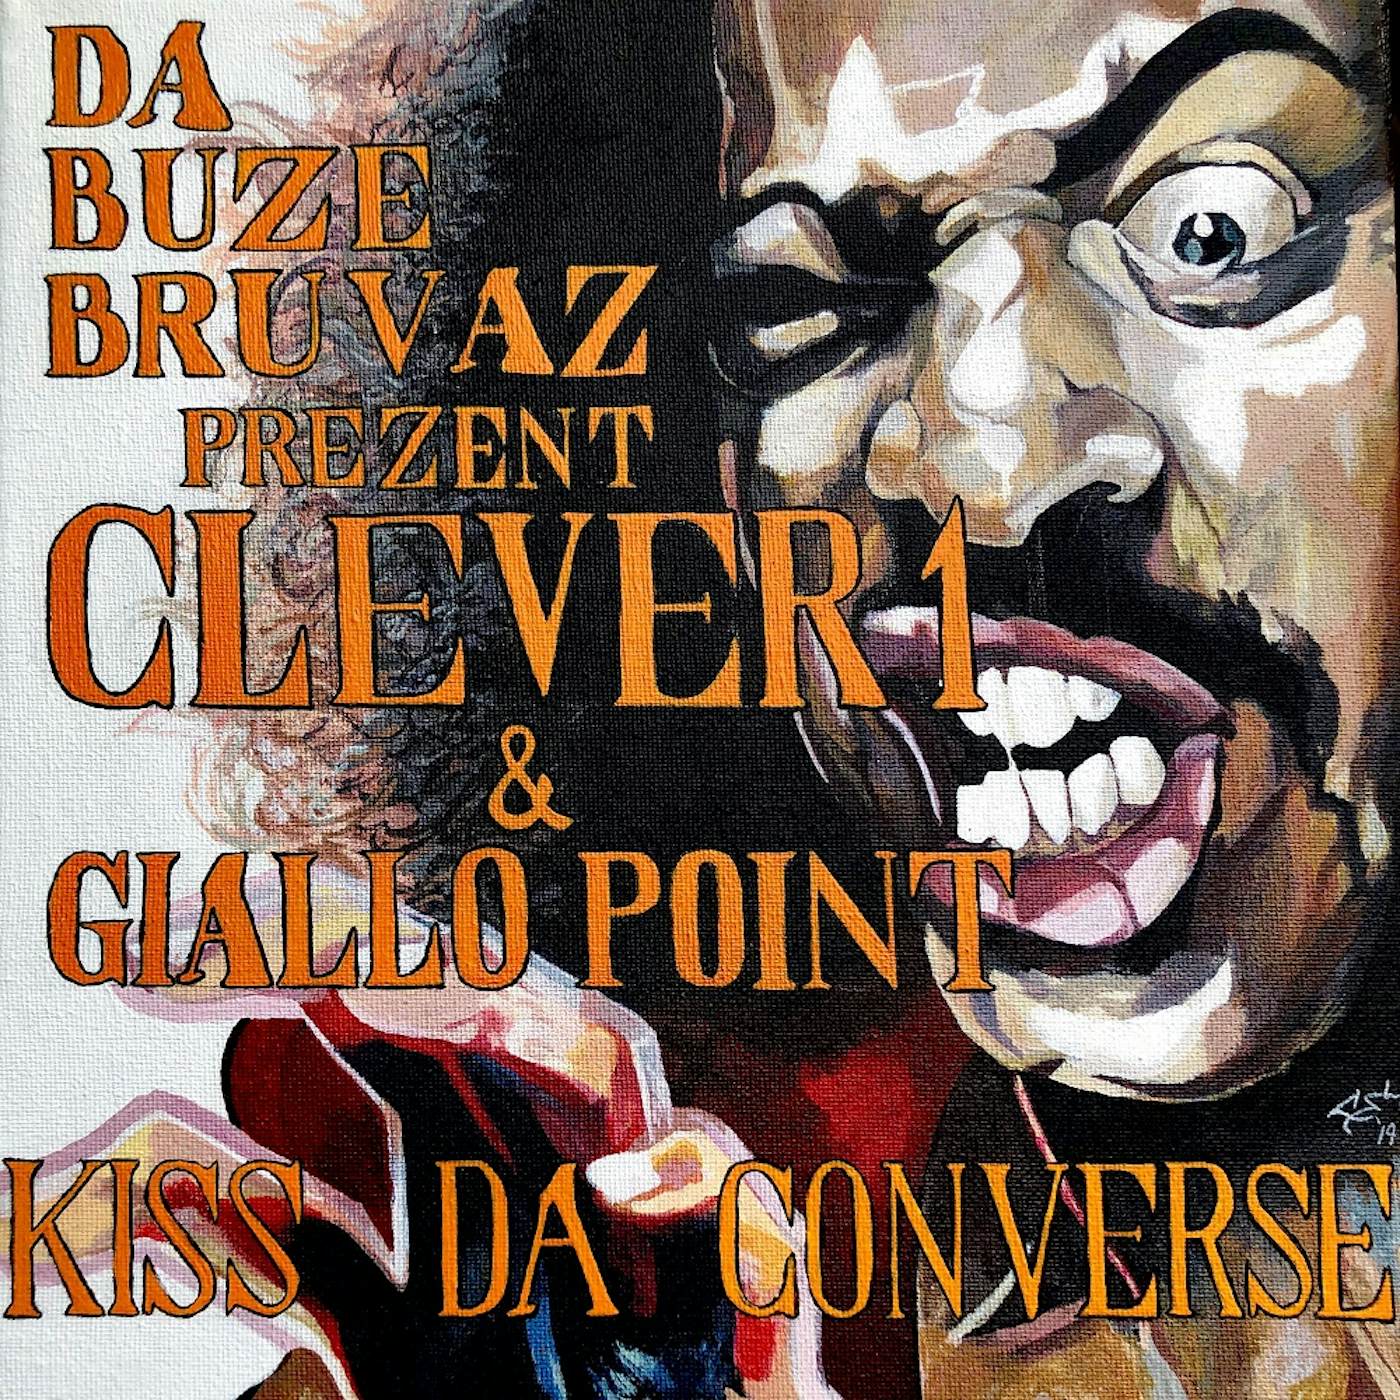 Da Buze Bruvaz Present Clever 1 & Giallo Point KISS DA CONVERSE CD